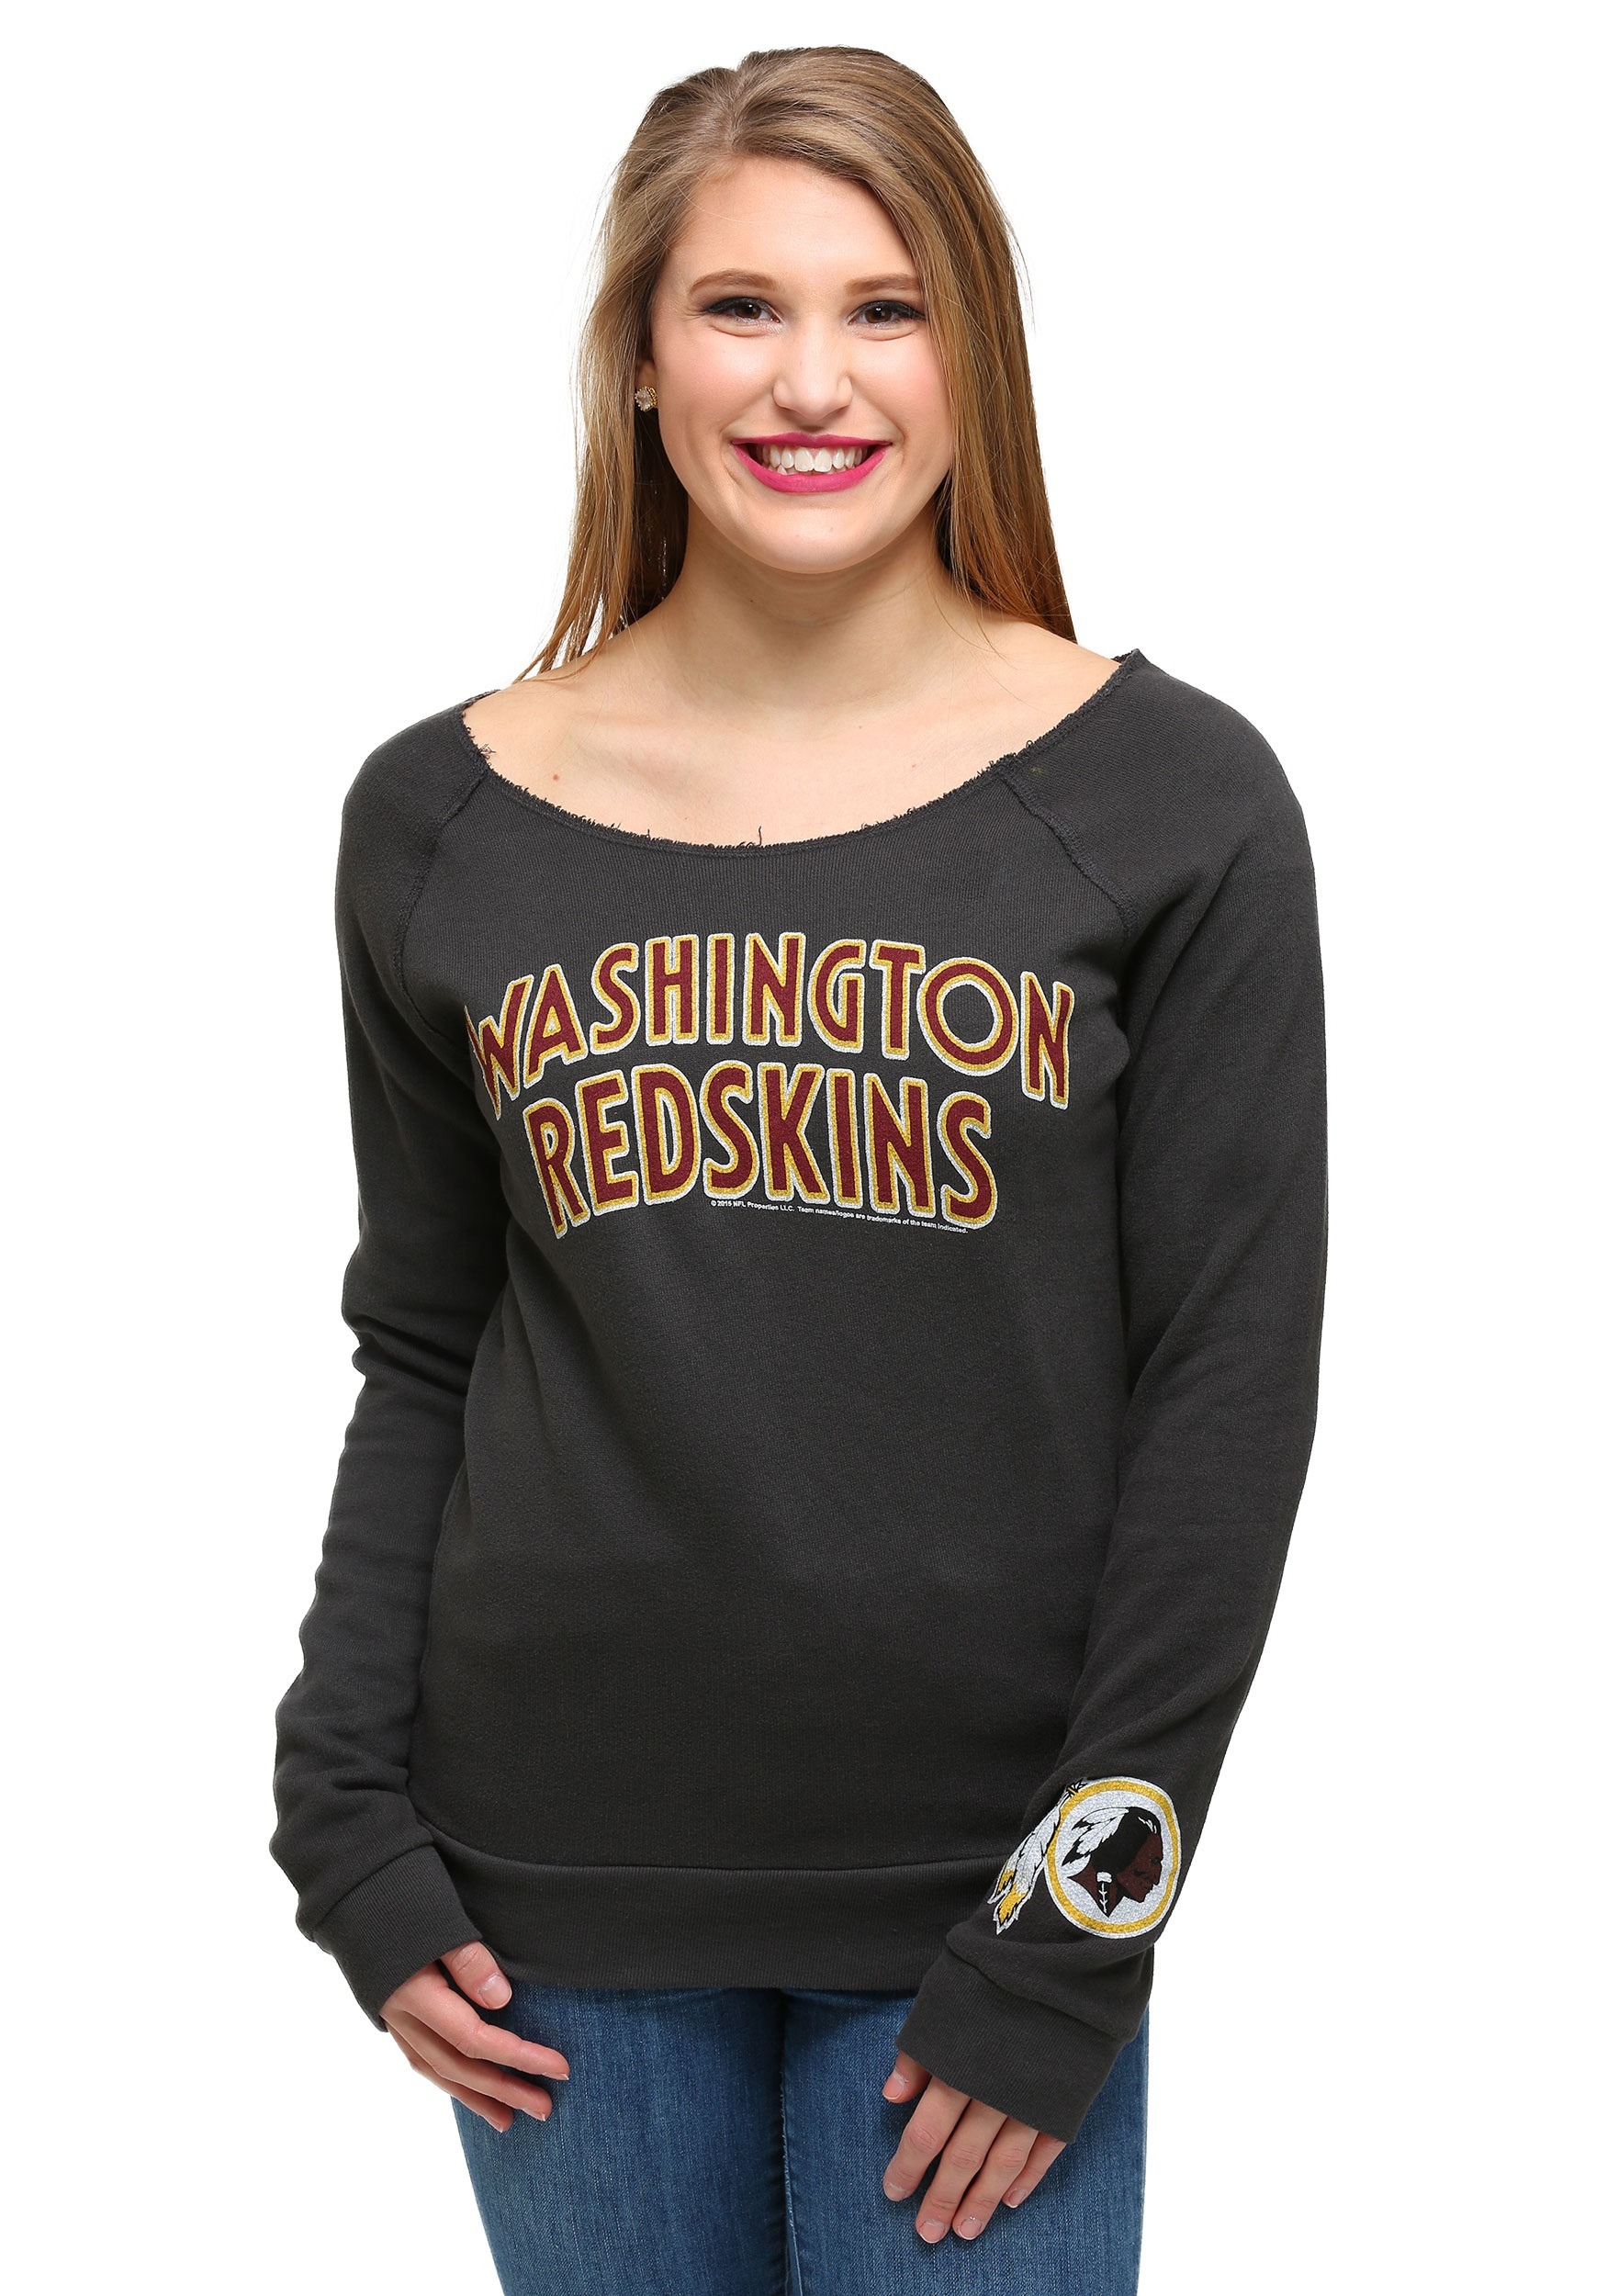 Womens Washington Redskins Champion Fleece Sweatshirt